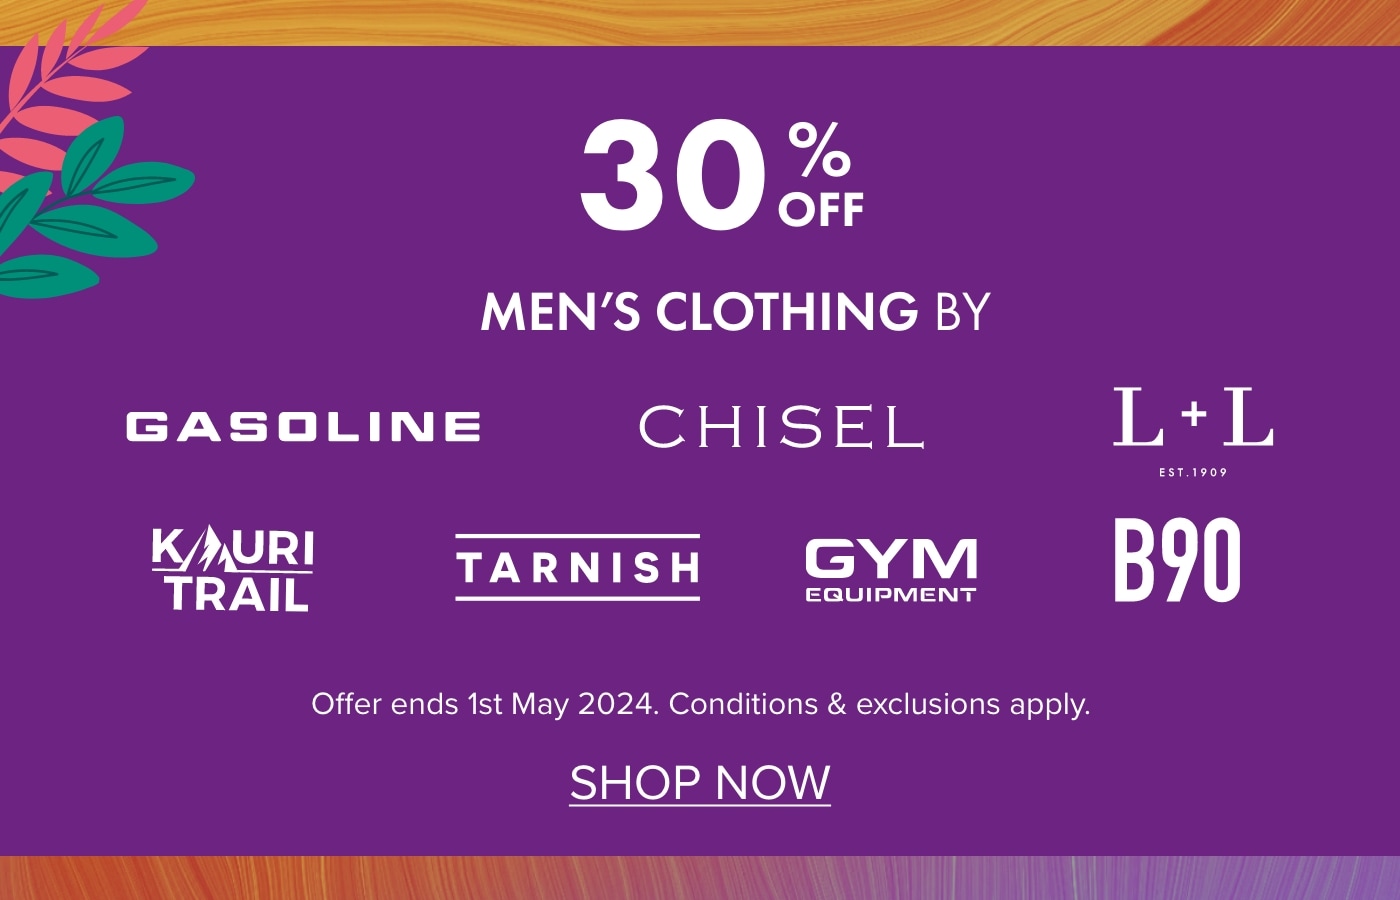 30% OFF Men's Clothing by Gasoline, Chisel, L+L Casual, Kauri Trail, Gym Equipment, B90 & Tarnish